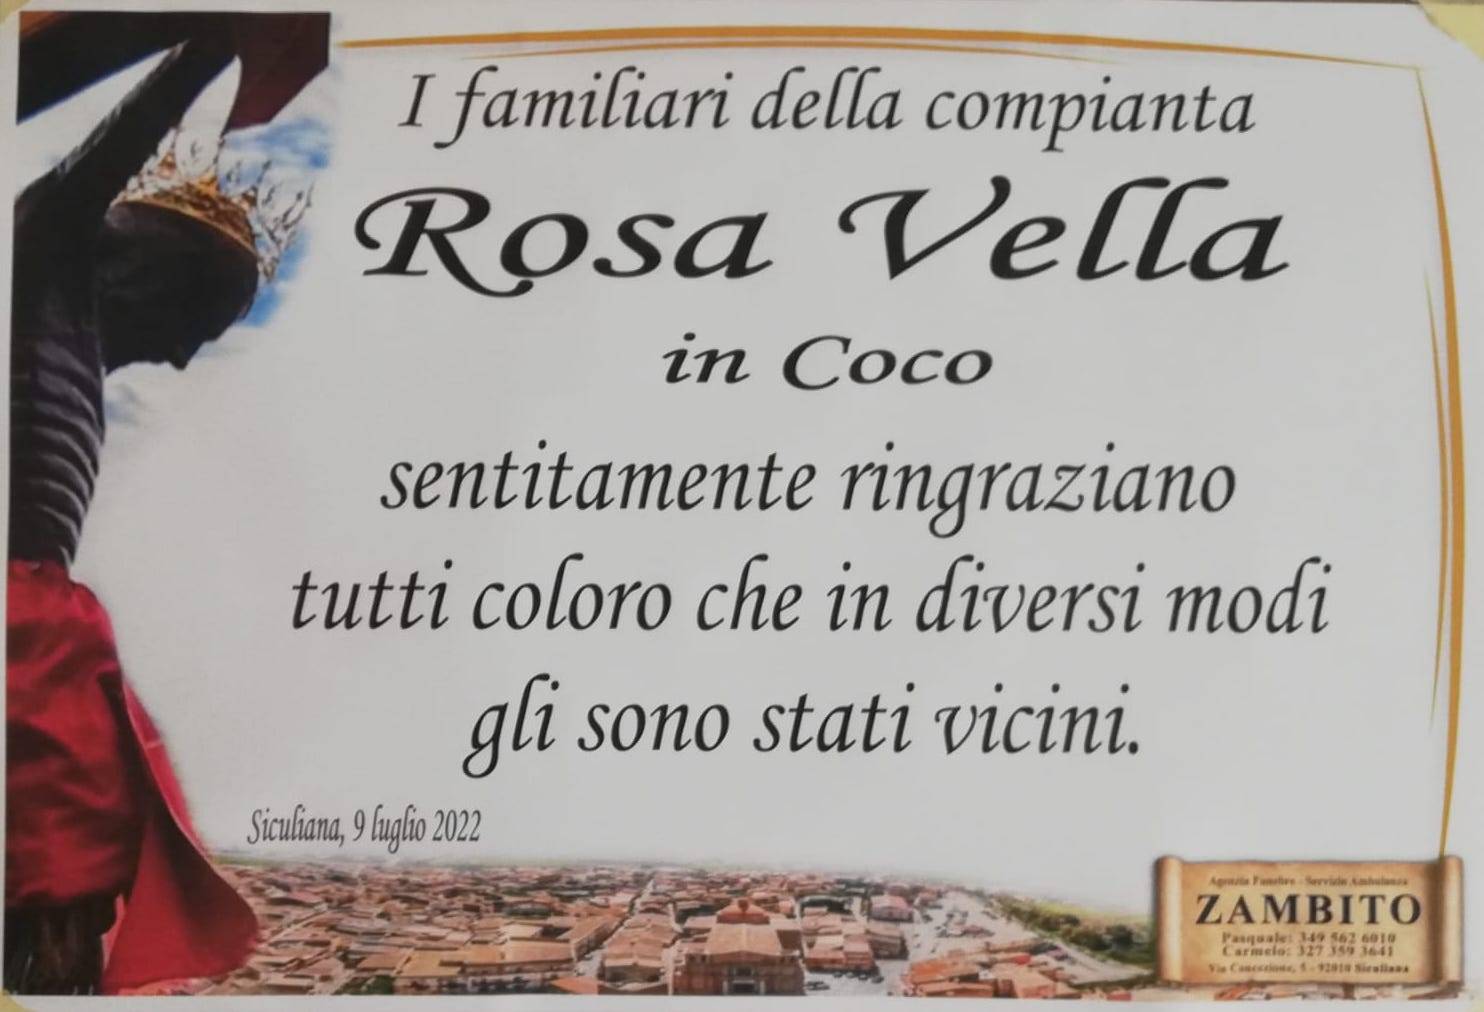 Rosa Vella